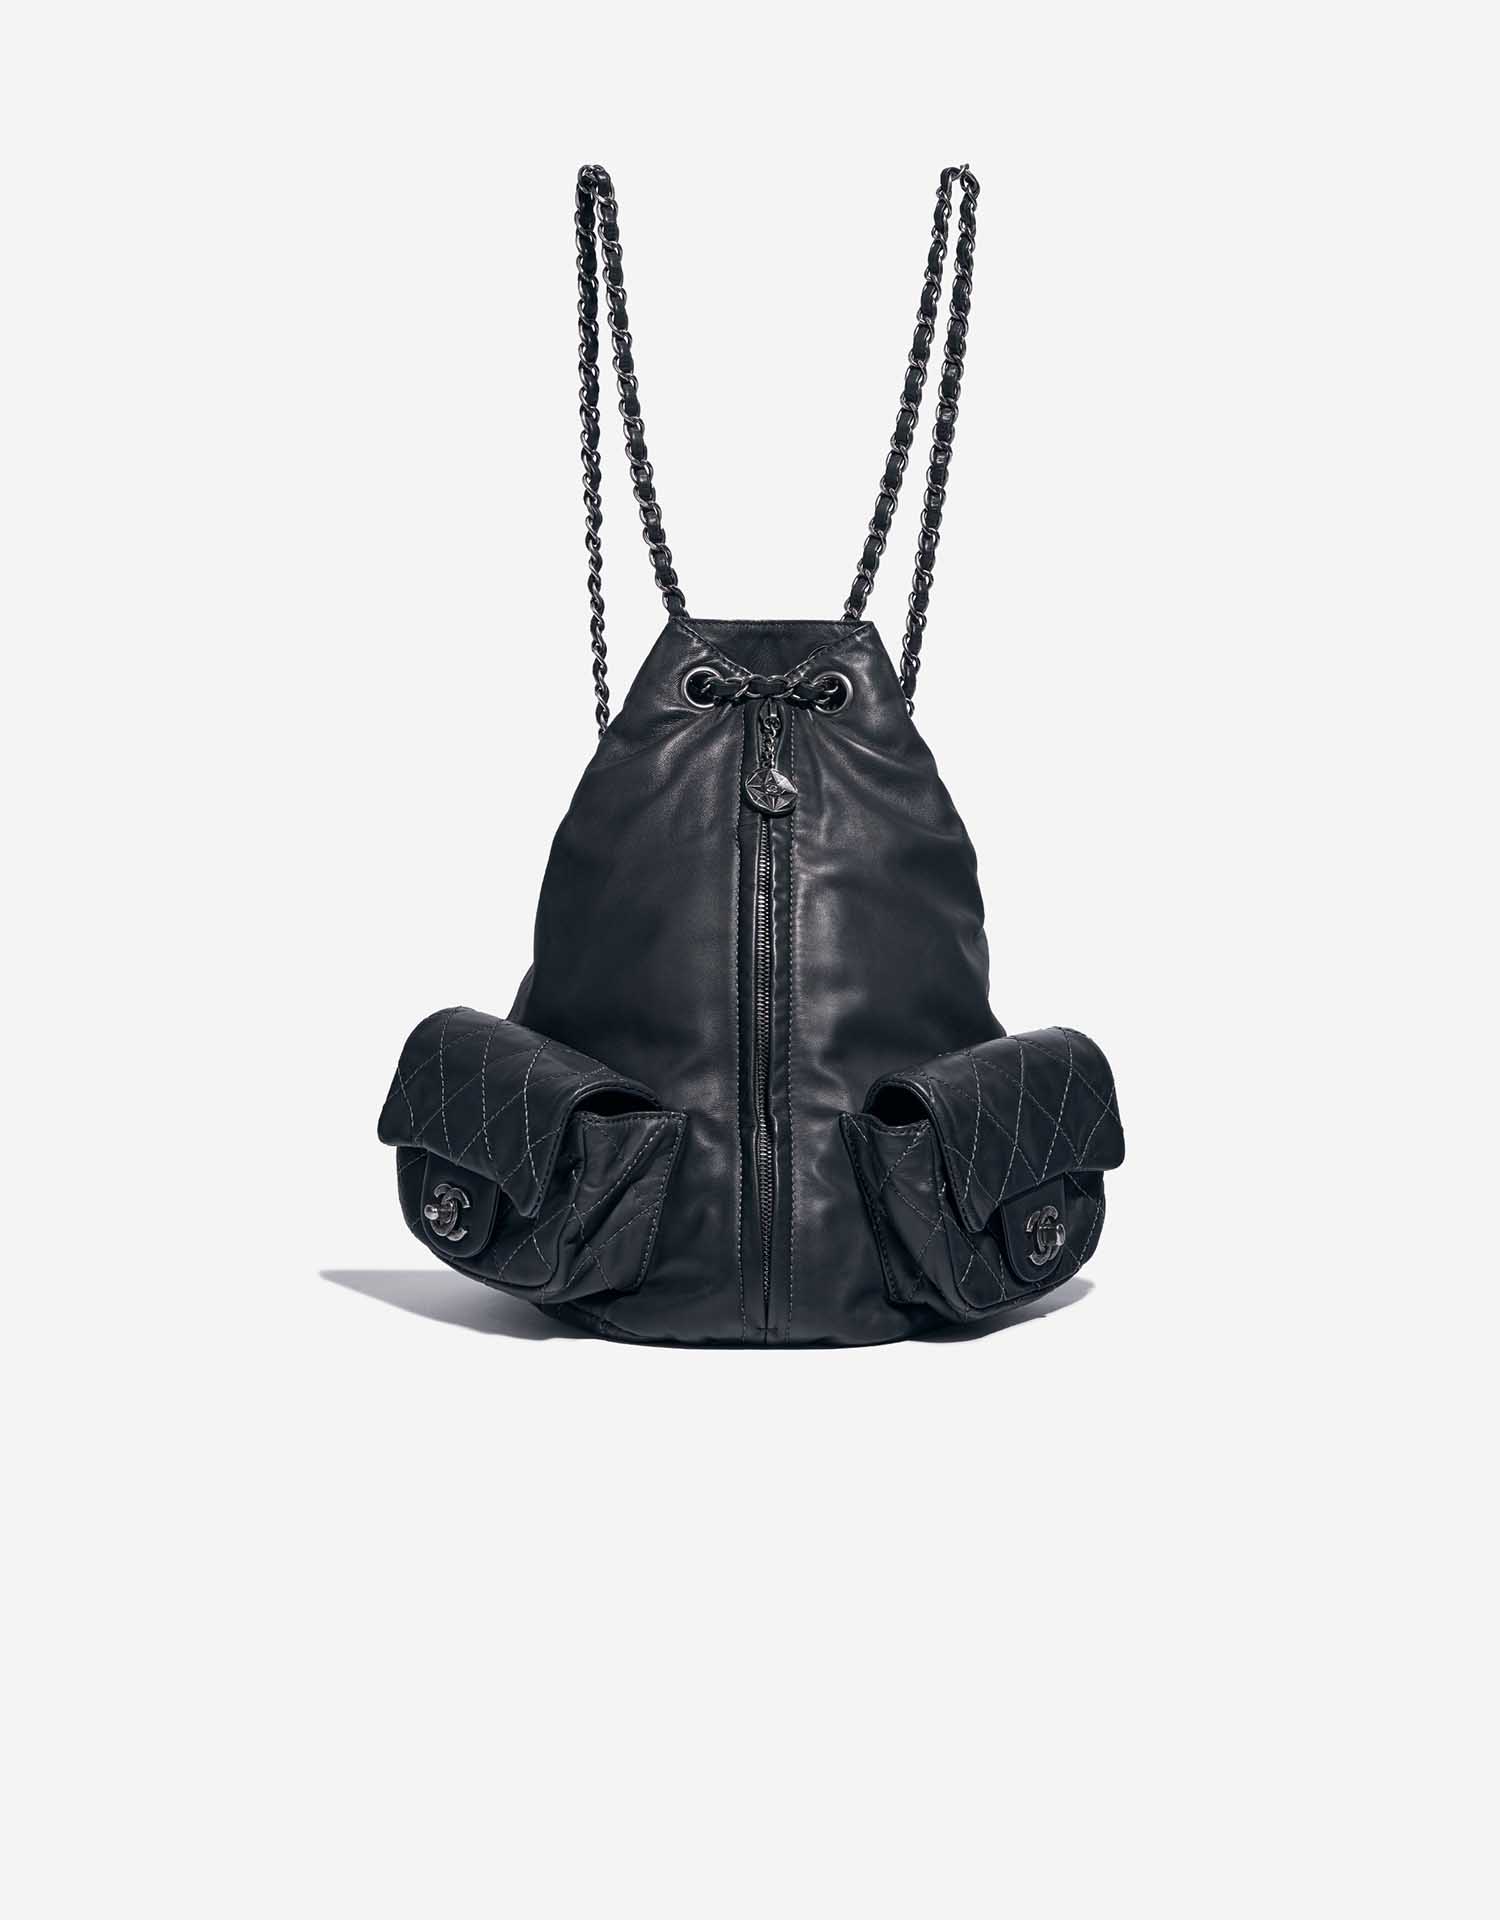 Chanel Backpack Wool / Lamb Blue / Black